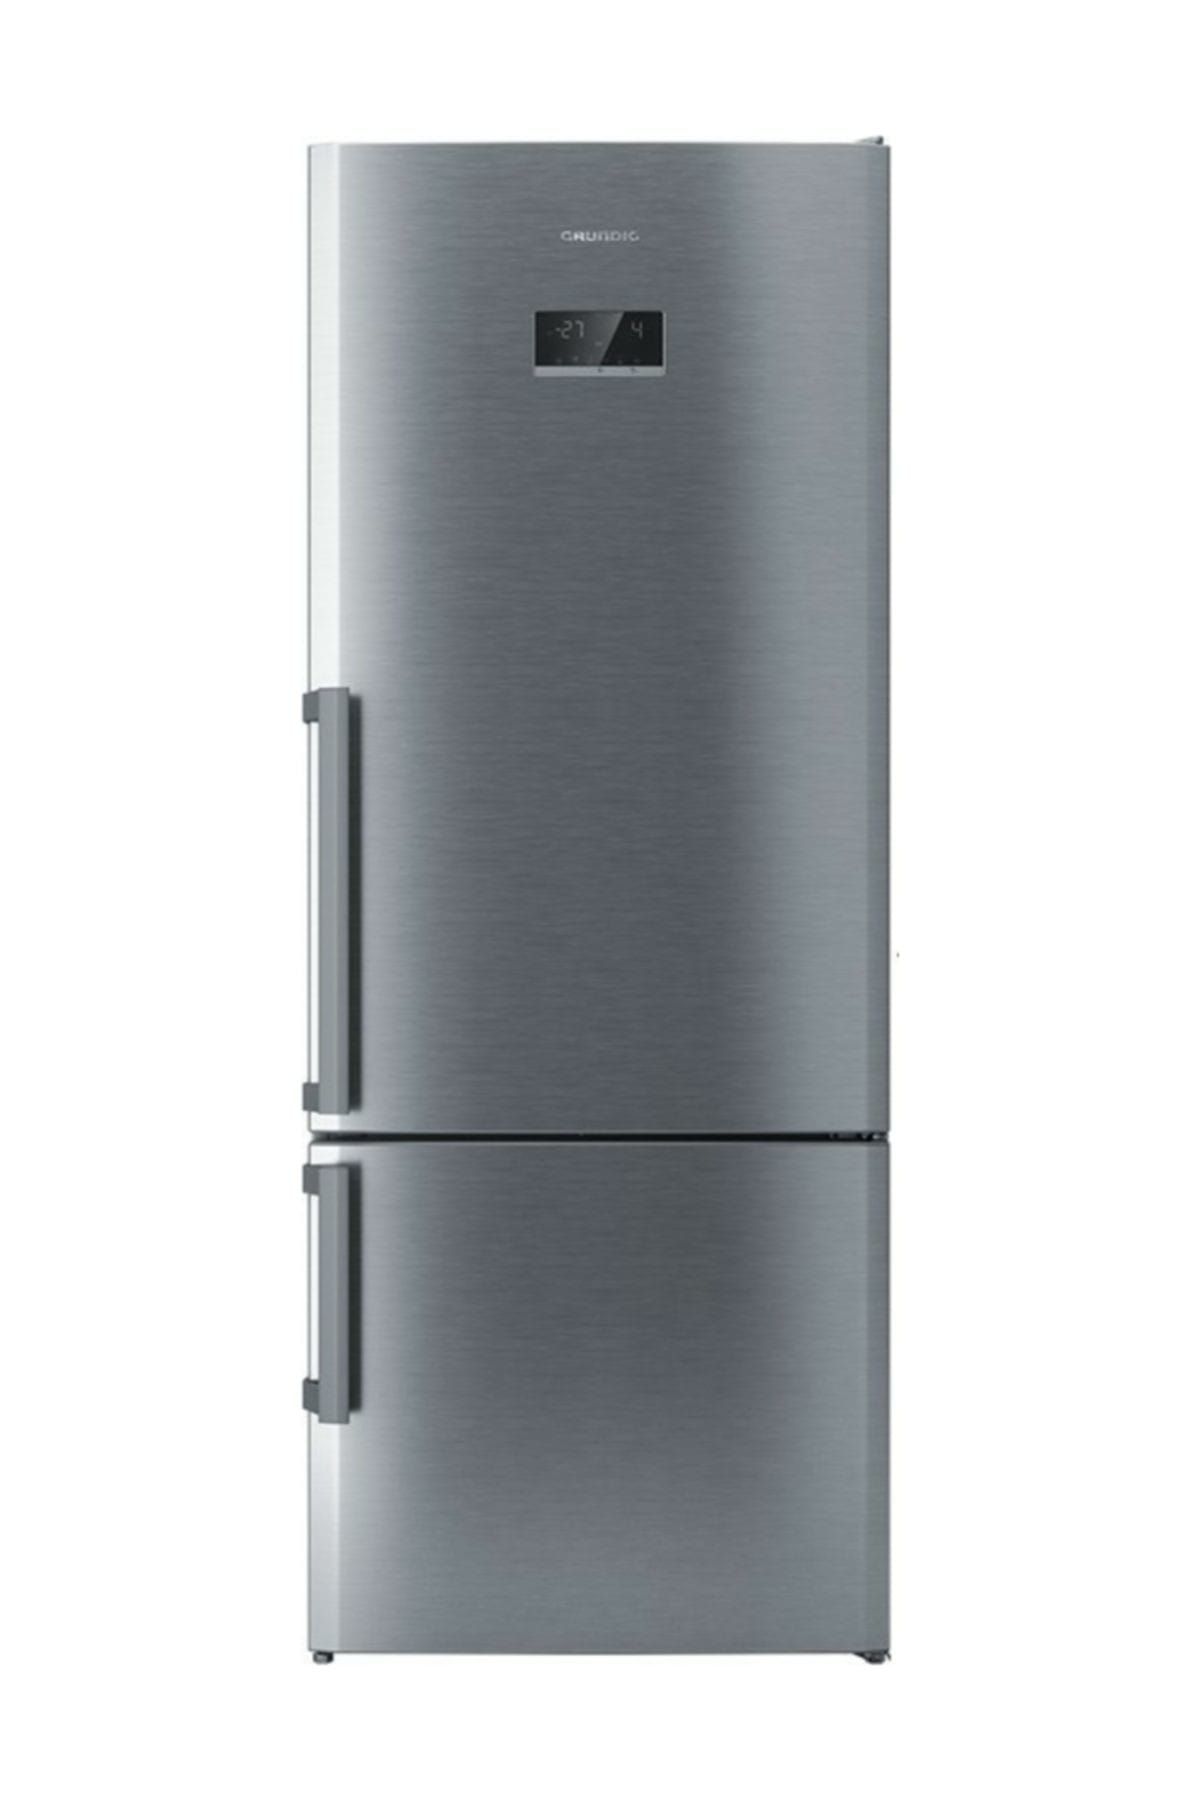 Grundig GKND 5300 I A++ 530 Lt NoFrost Kombi Tipi Buzdolabı